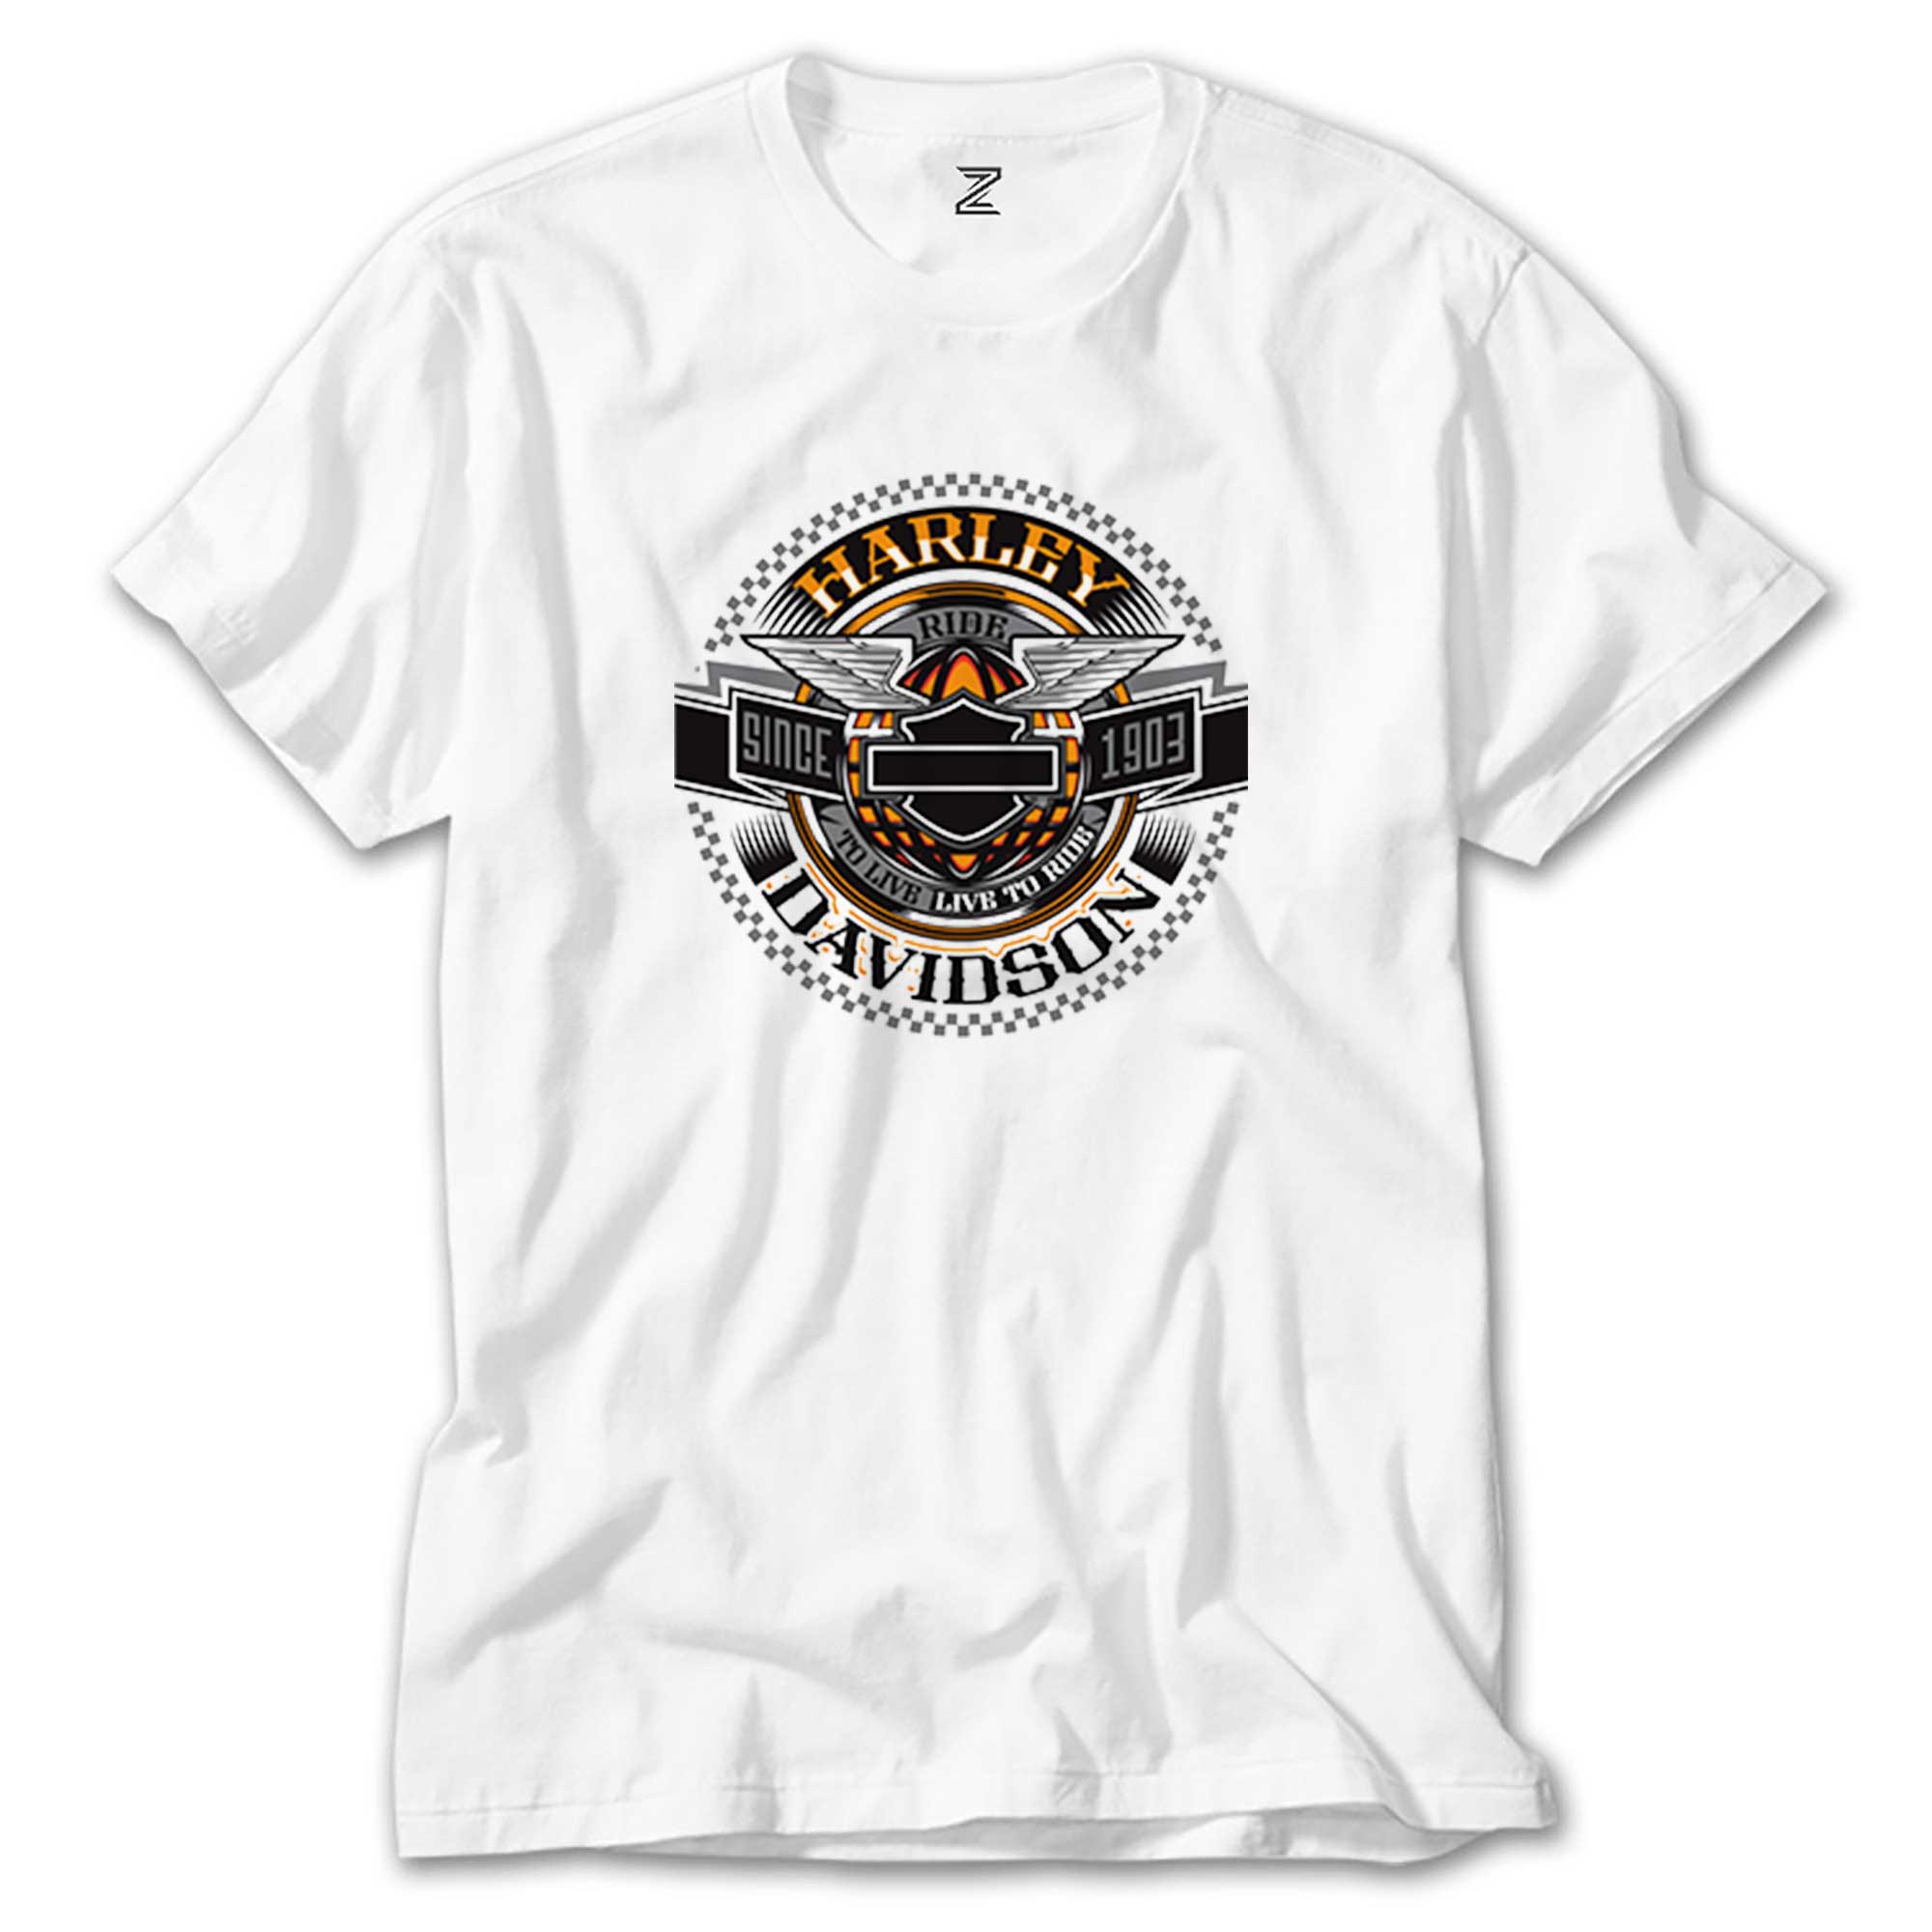 Harley Davidson MotorClothes Beyaz Tişört